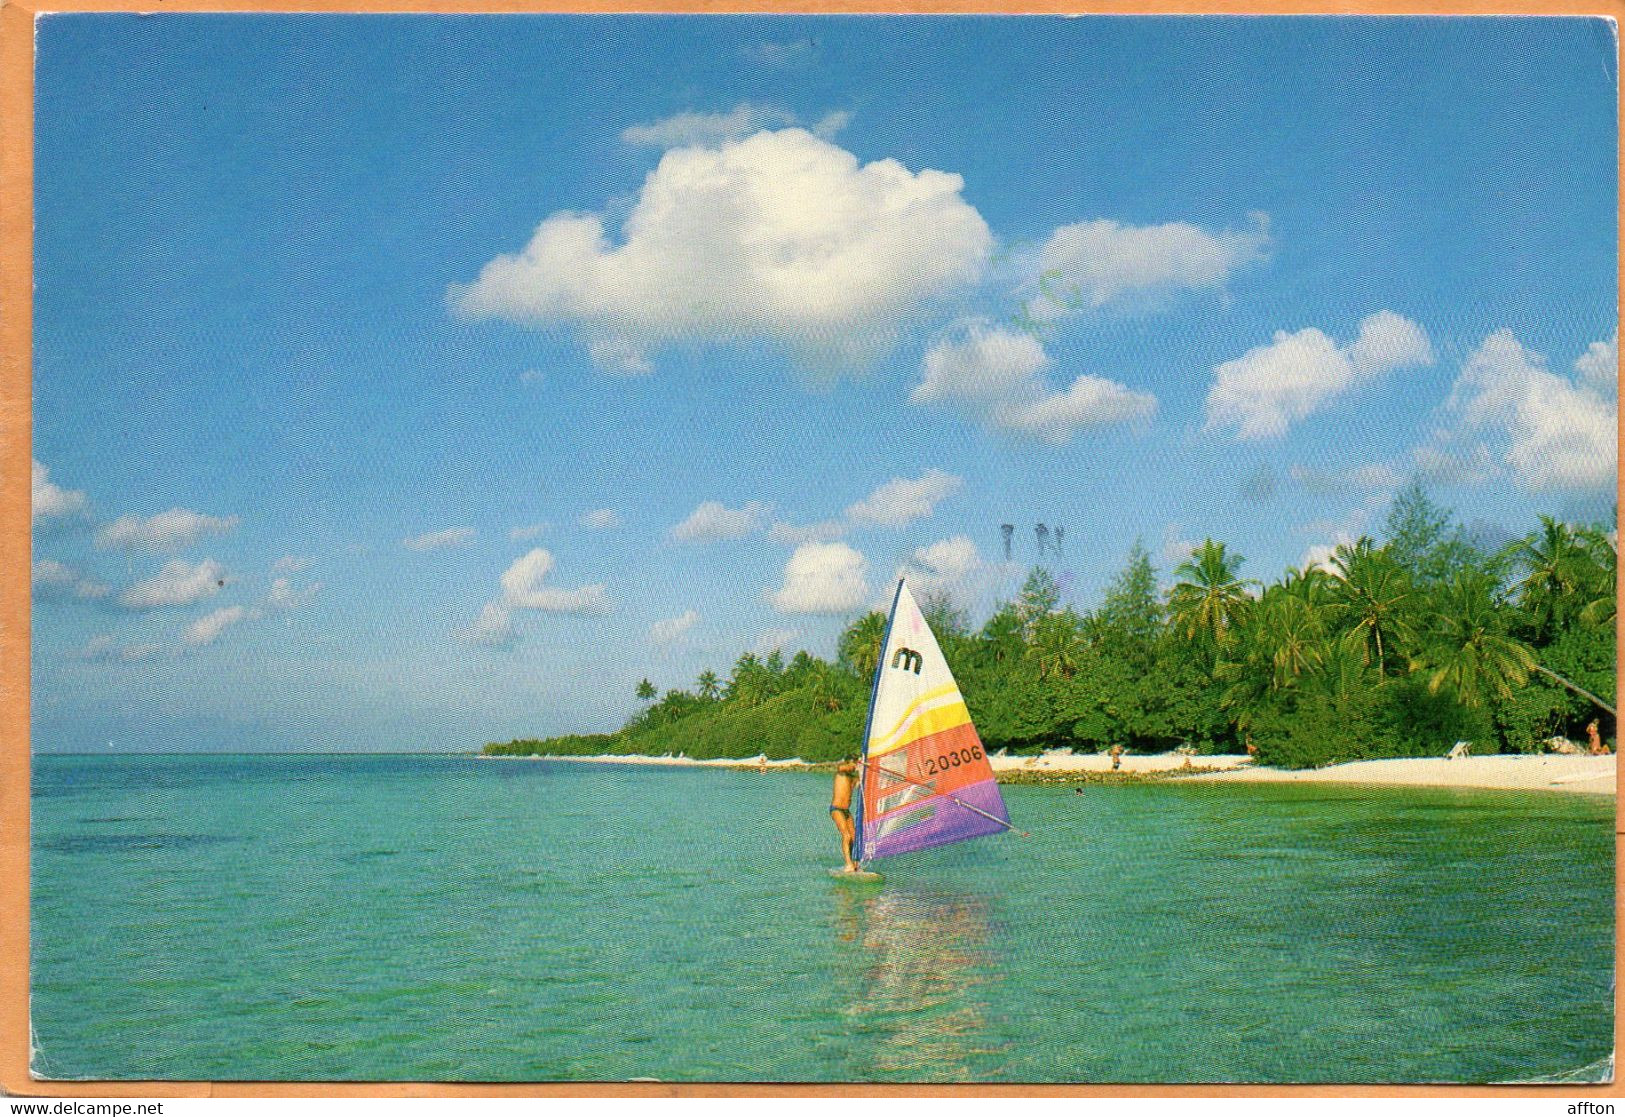 Maldives Islands Old Postcard Mailed - Maldive